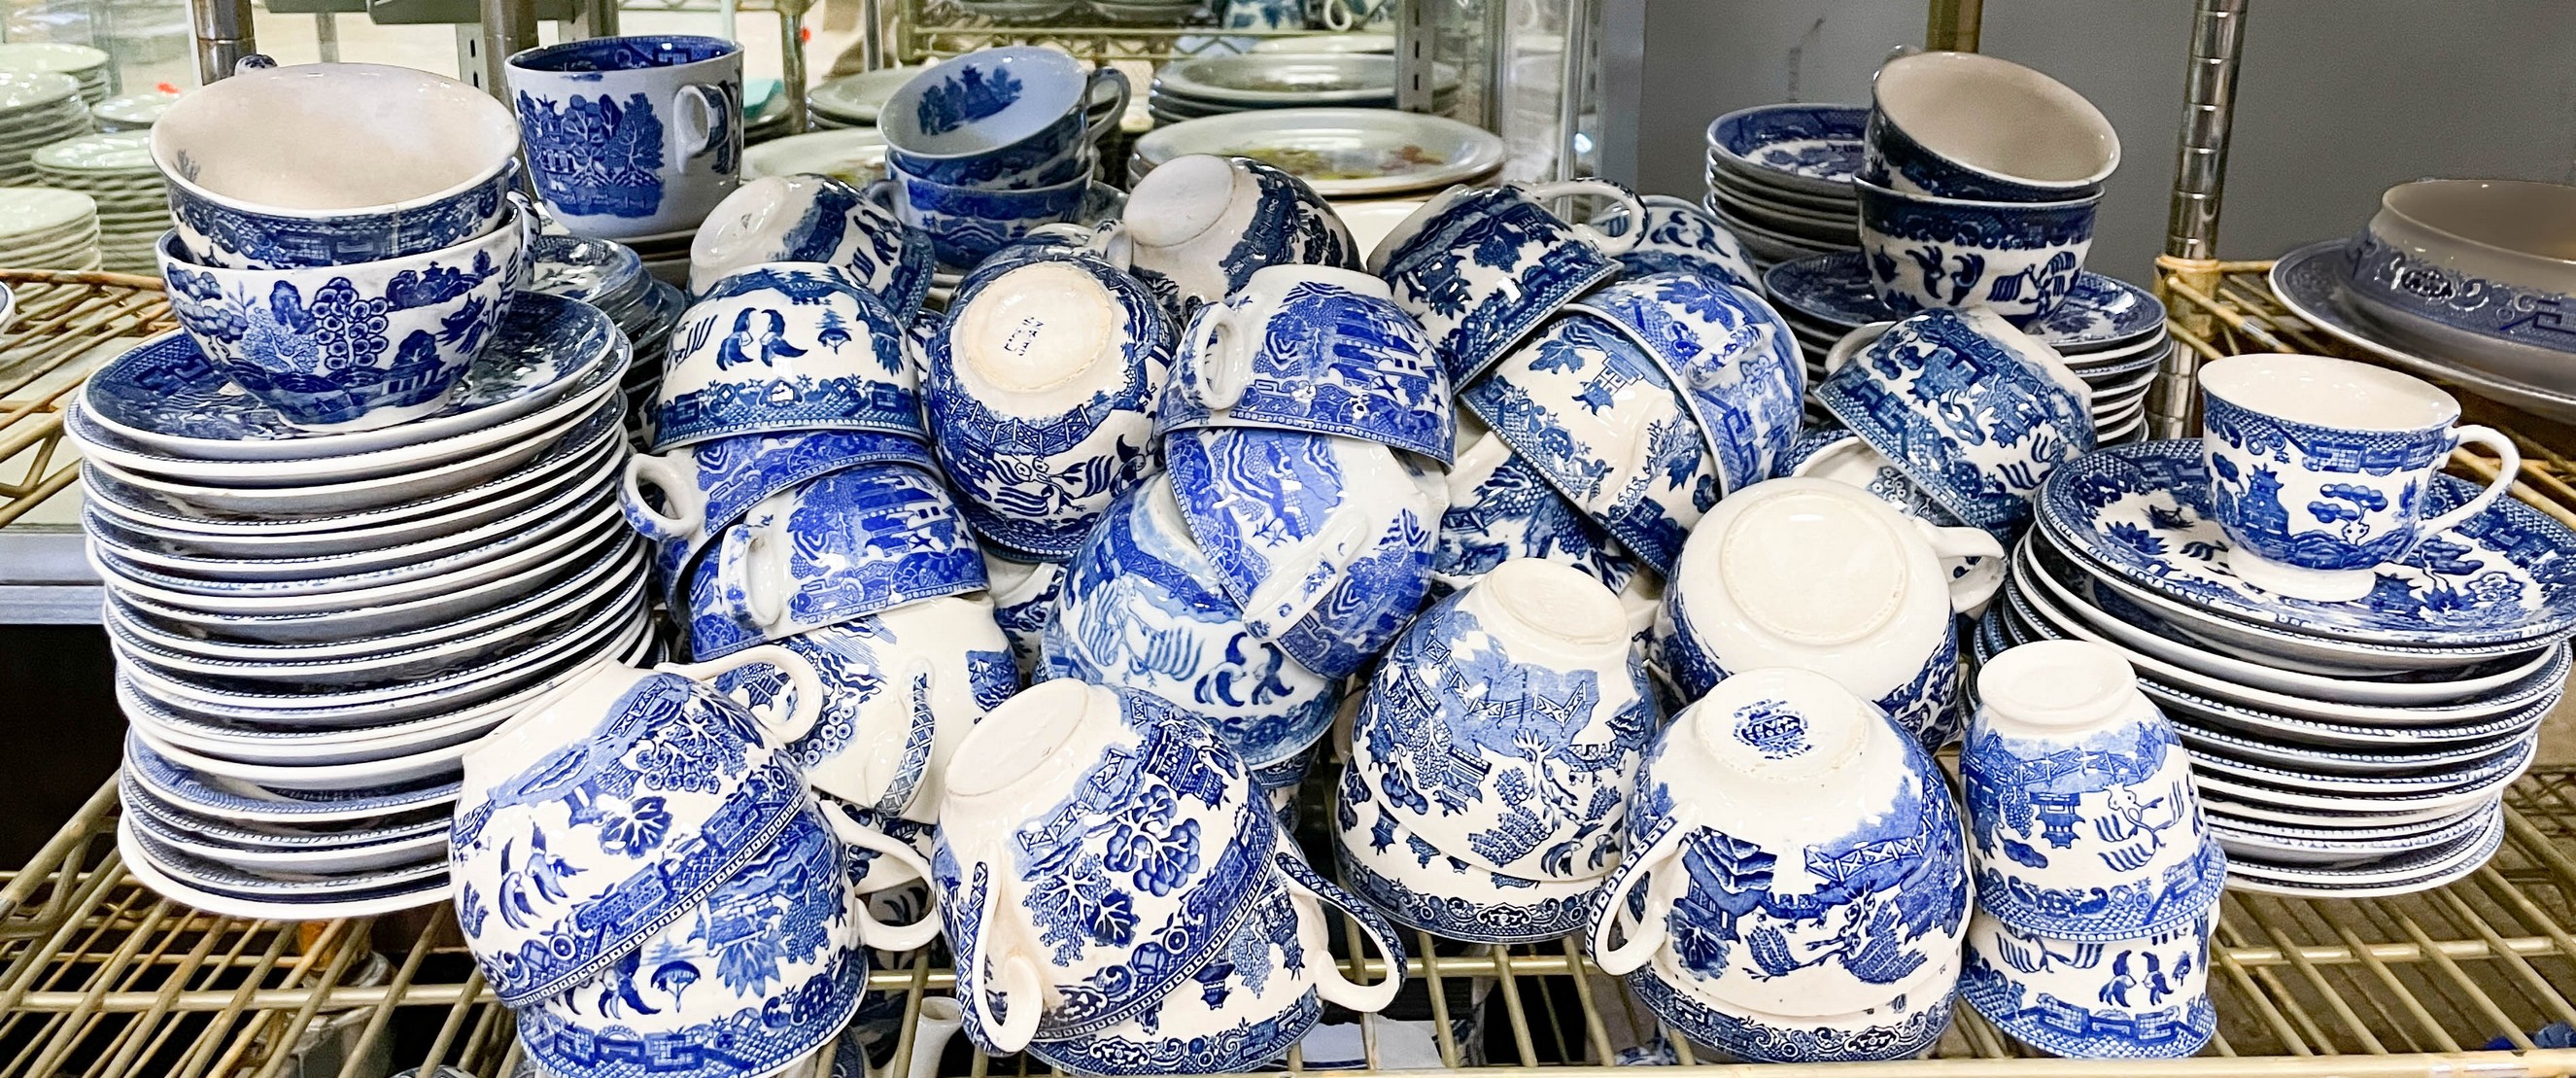  180 Blue Willow porcelain cups 27a84e